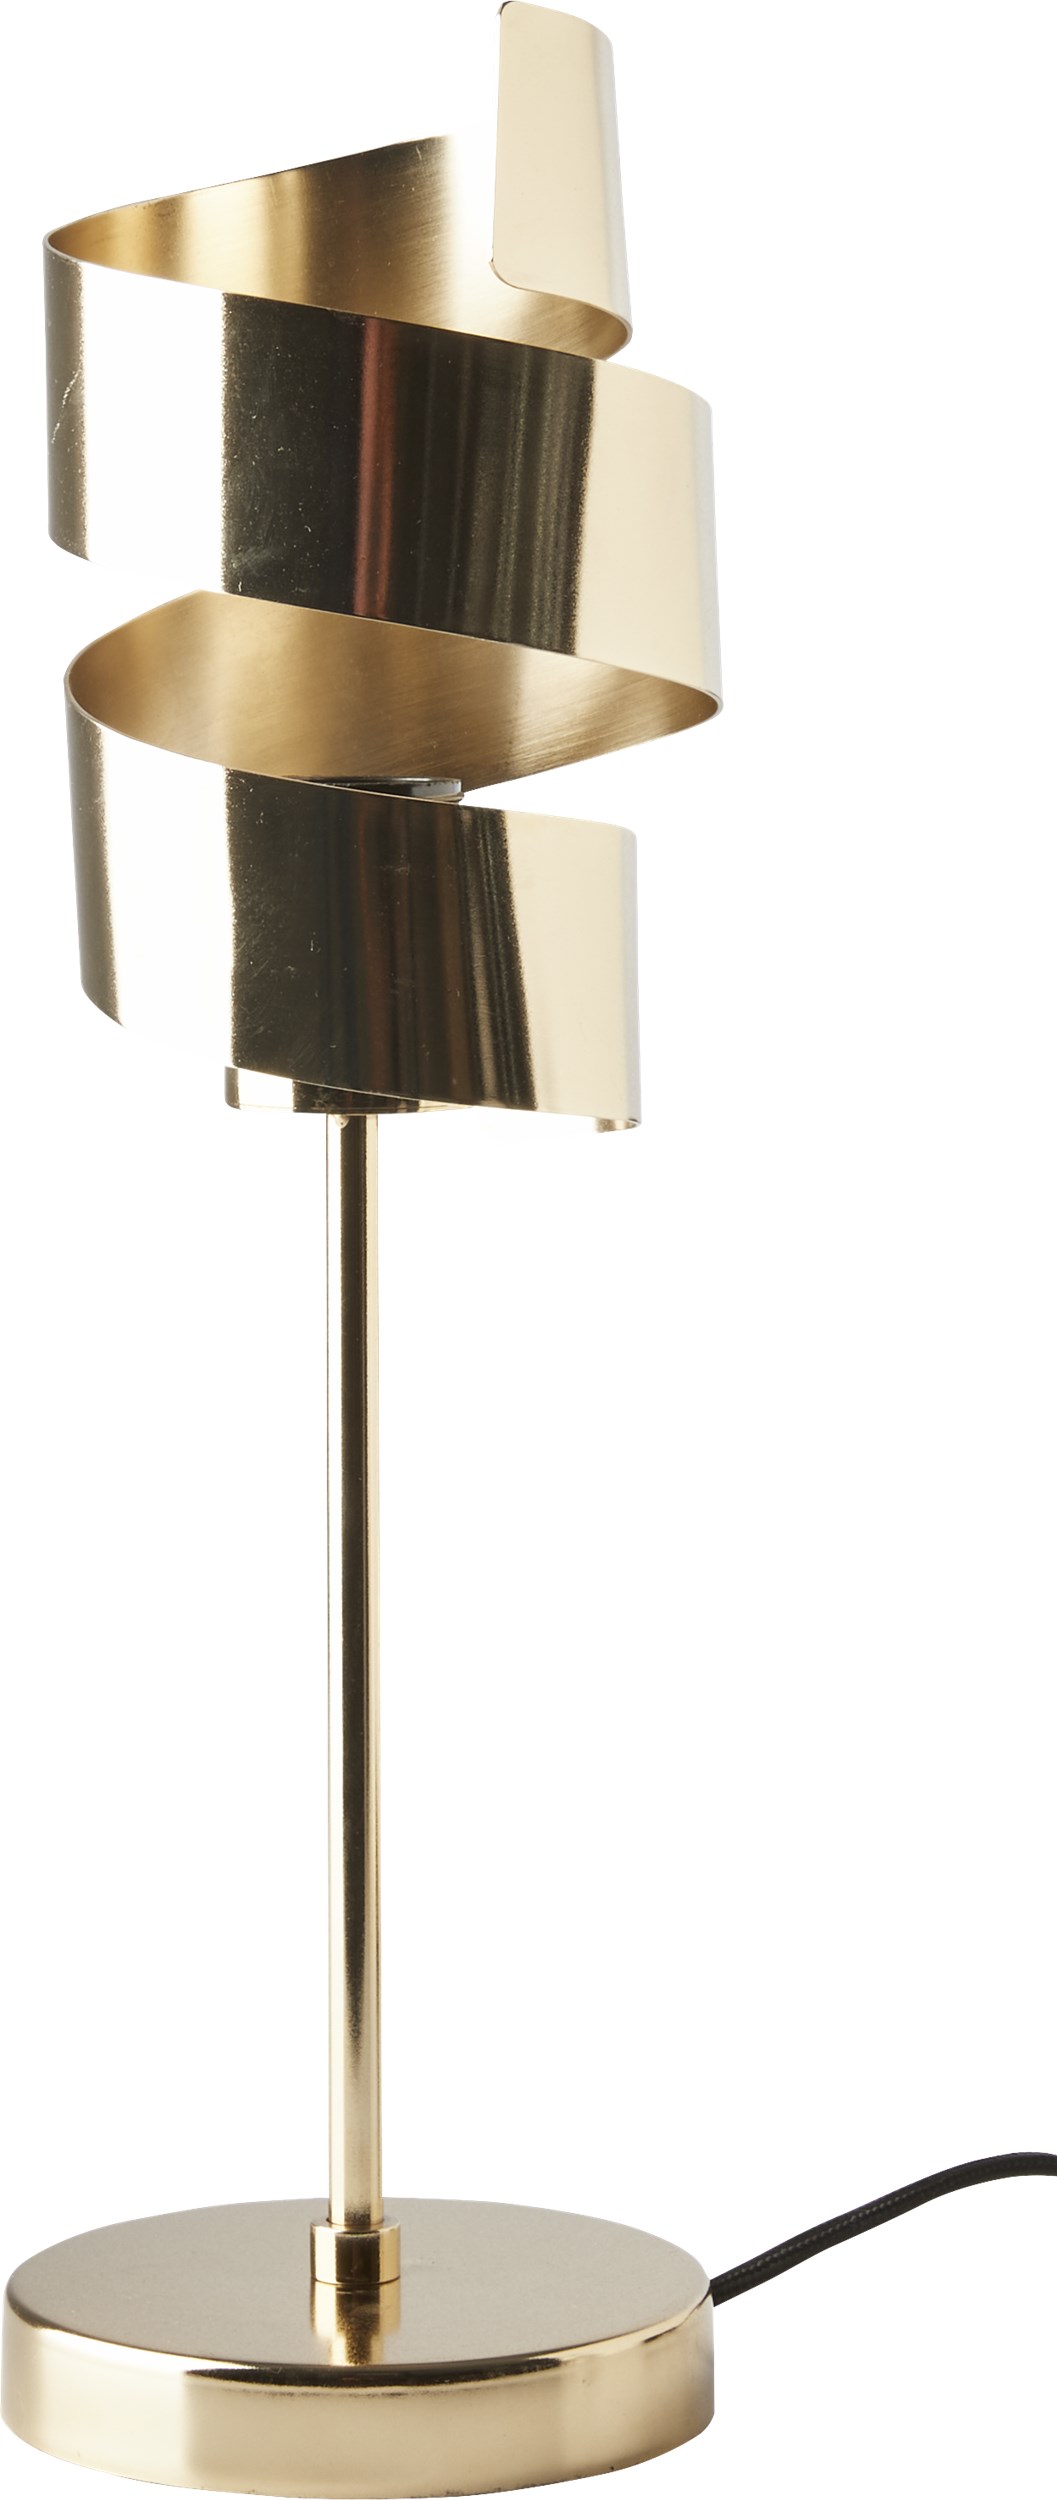 Twister Bordlampe 40 x 14 cm - Messingfarvet metal og Sort stof ledning